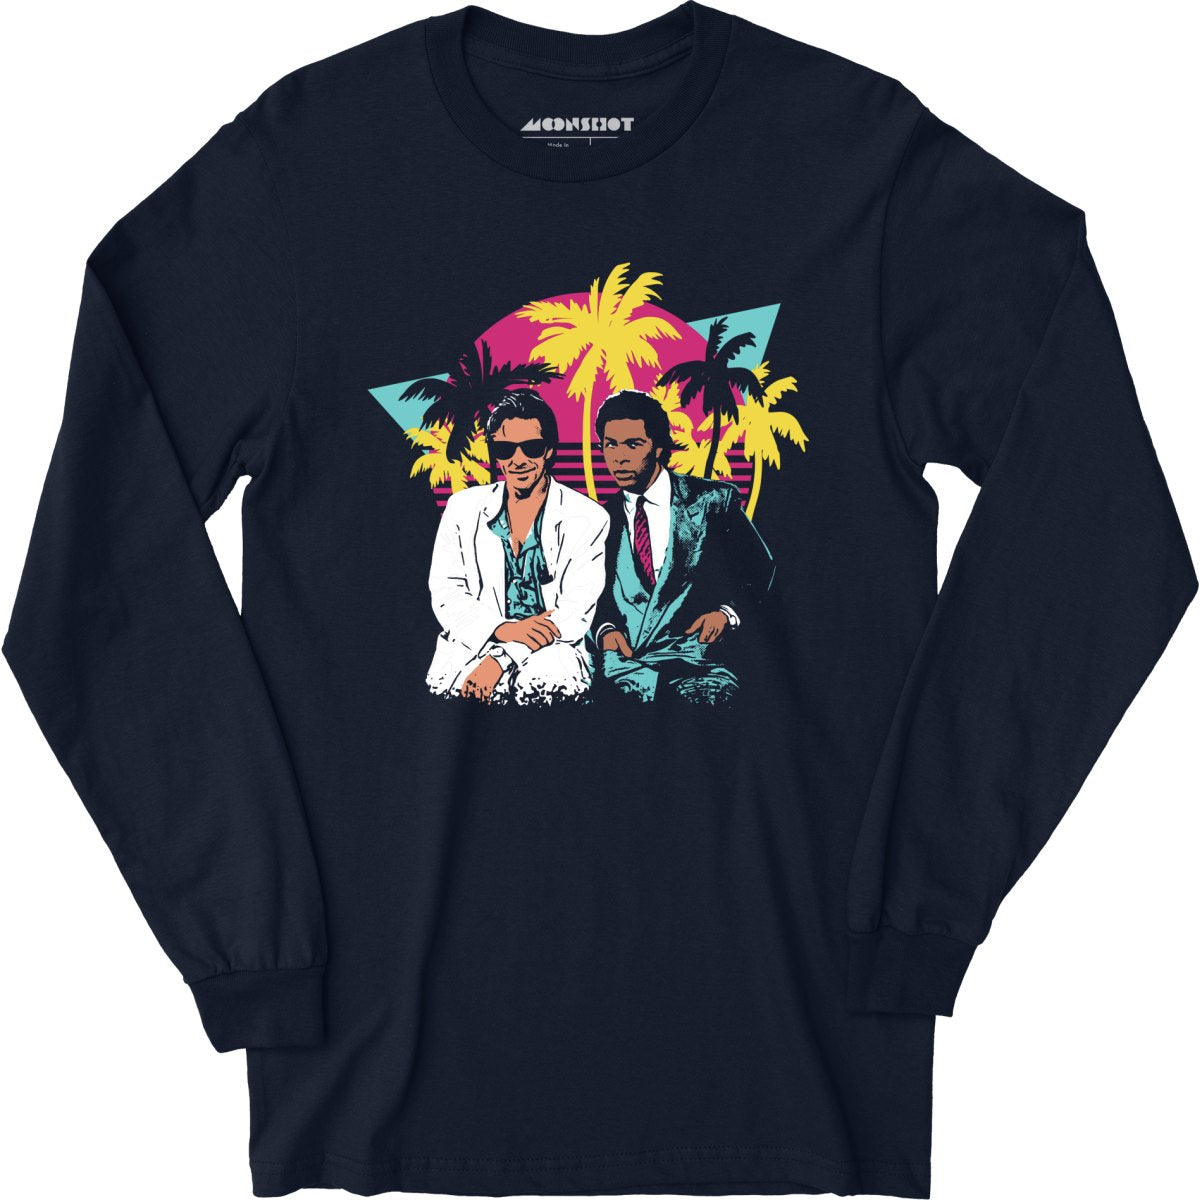 Crockett and Tubbs - Long Sleeve T-Shirt